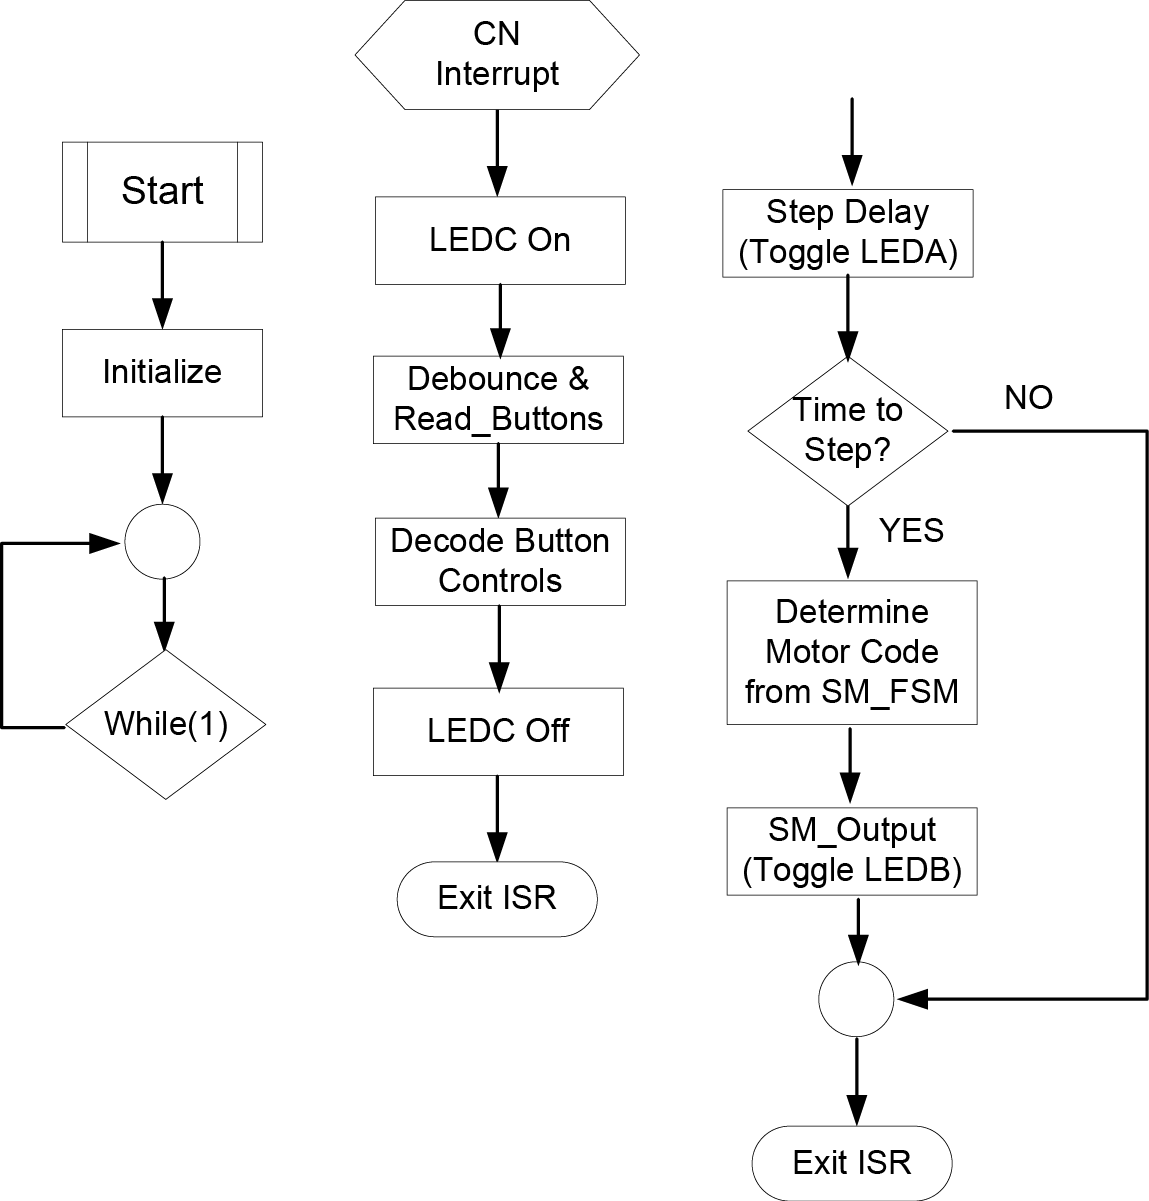 Figure 3. Control flow diagram.